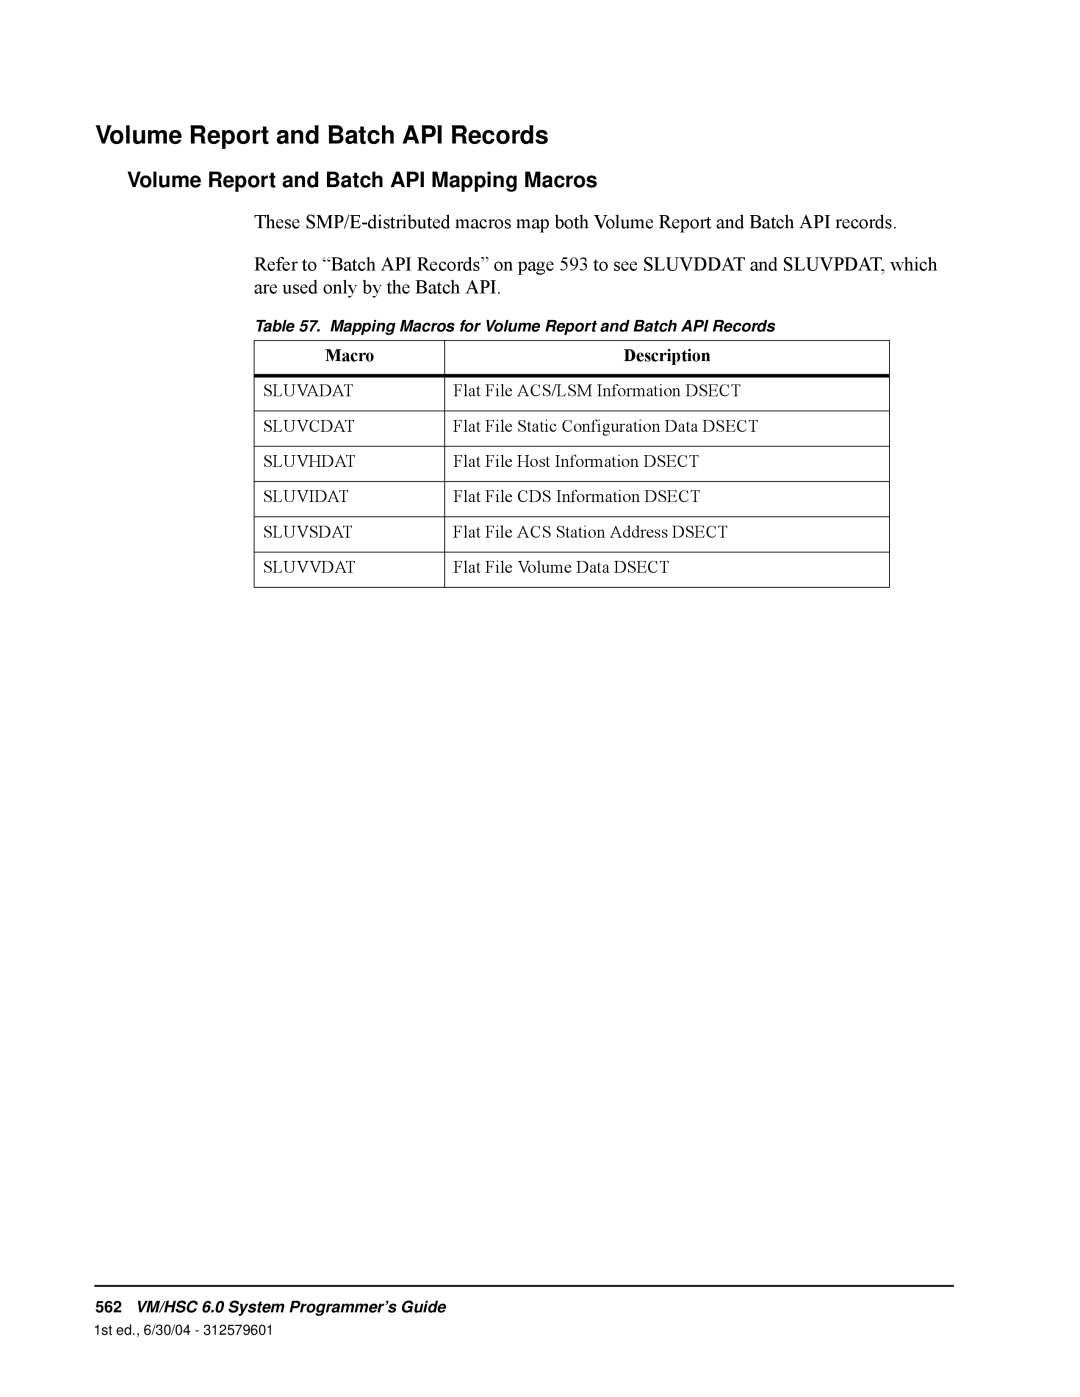 StorageTek 6 manual Volume Report and Batch API Records, Volume Report and Batch API Mapping Macros 